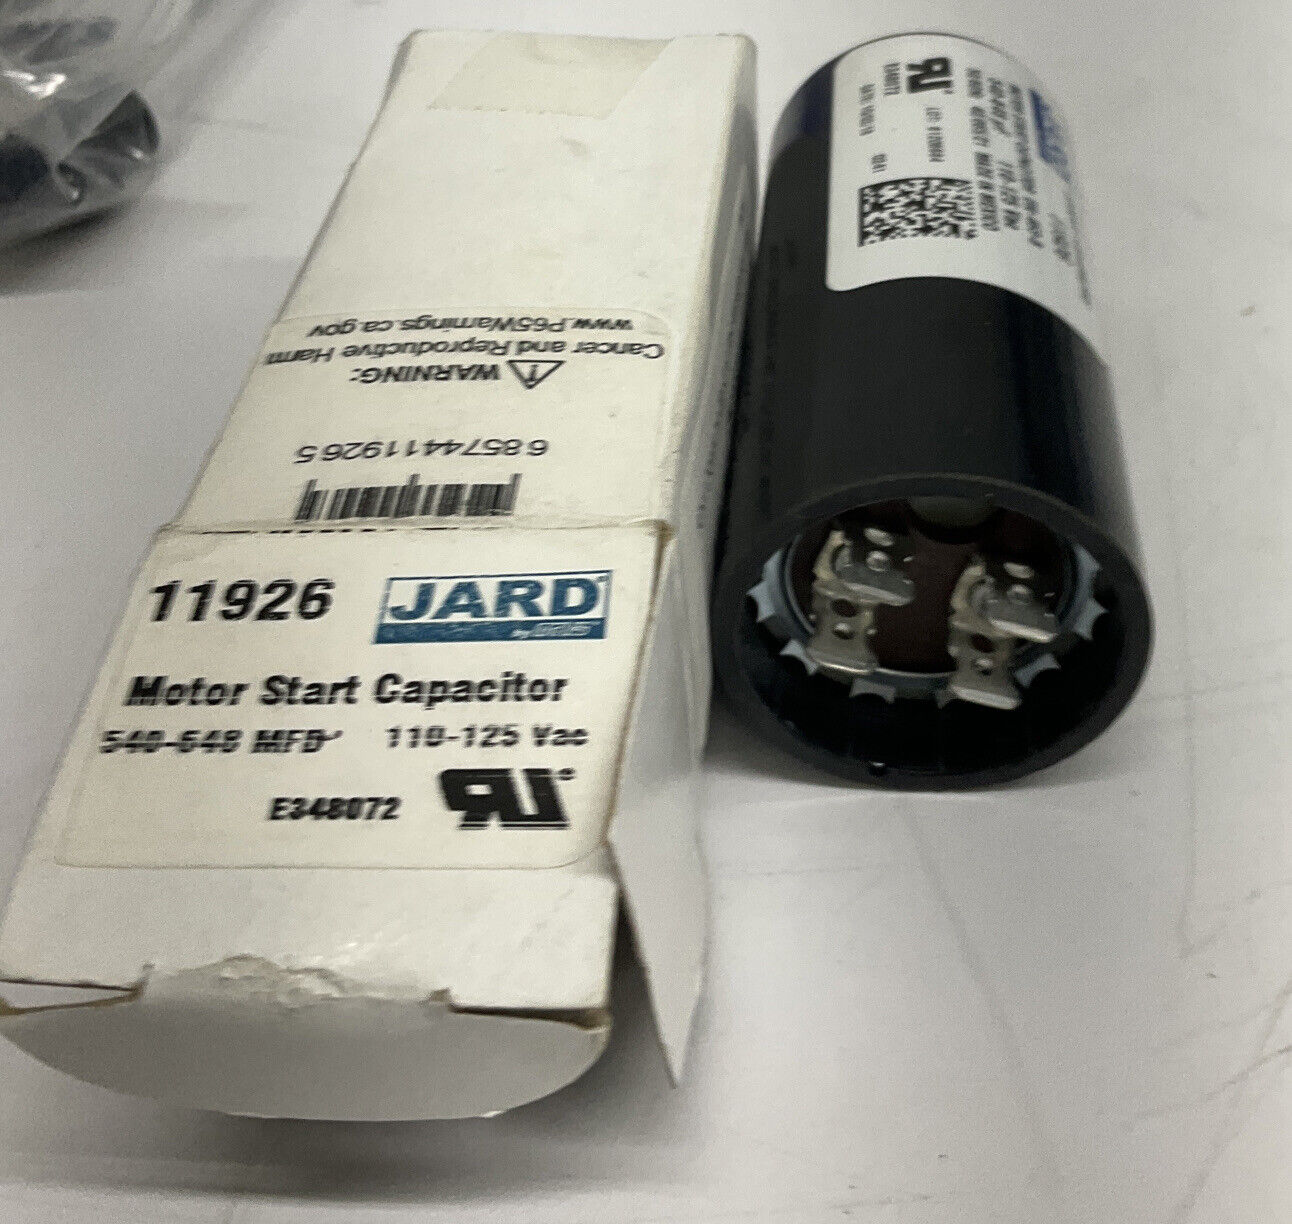 Jard 11926 Motor Start Capacitor  (BL154)